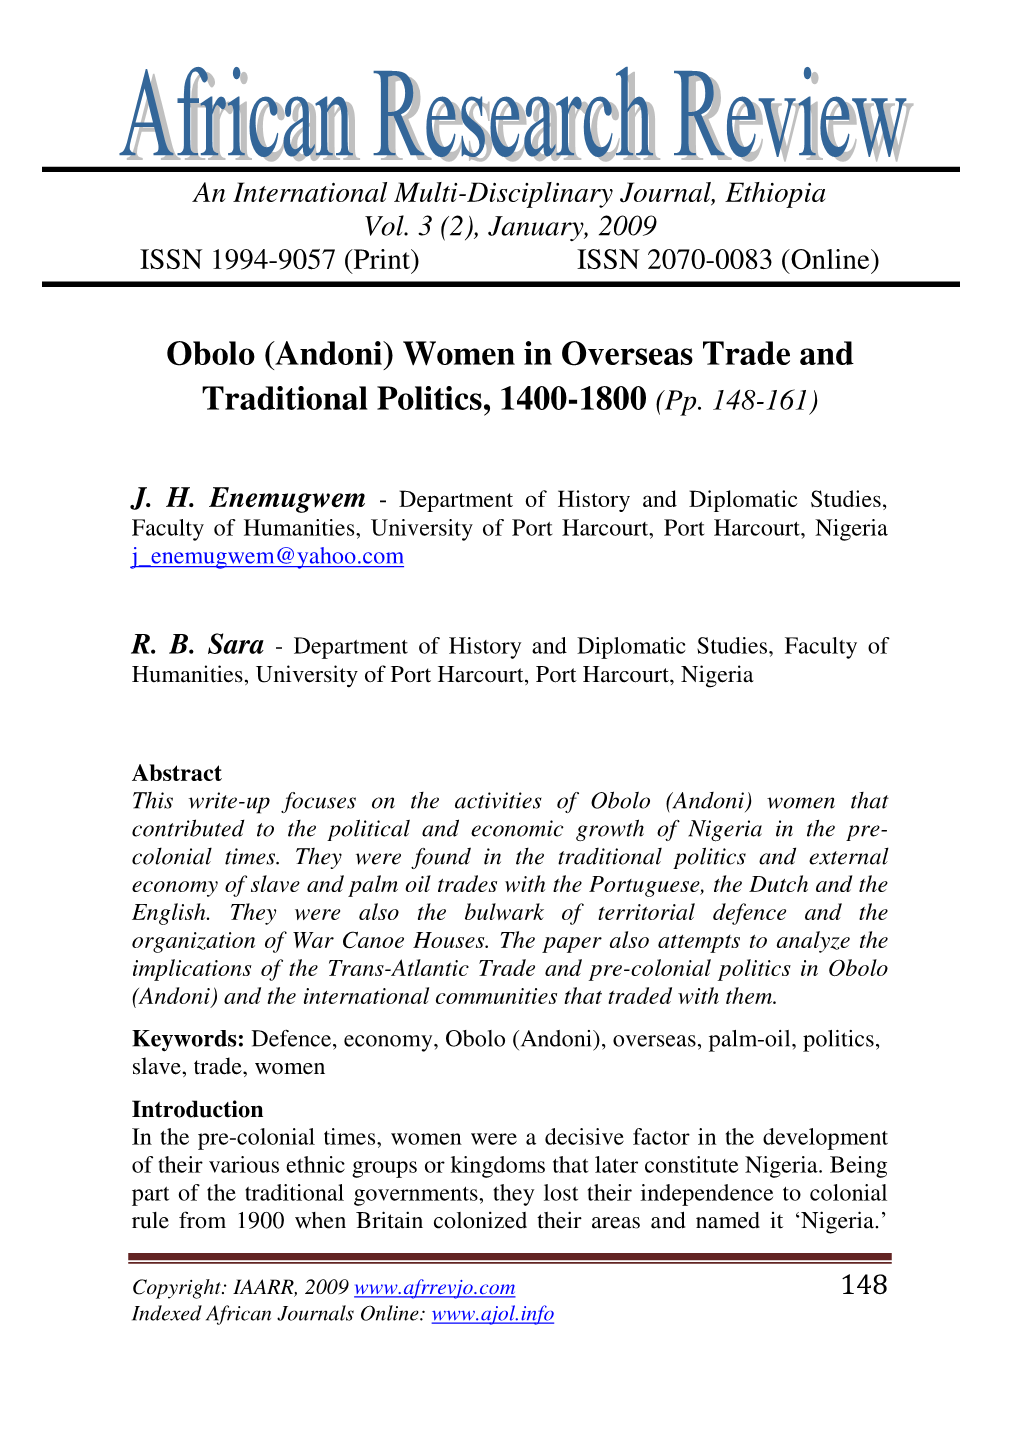 Obolo (Andoni) Women in Overseas Trade and Traditional Politics, 1400-1800 (Pp